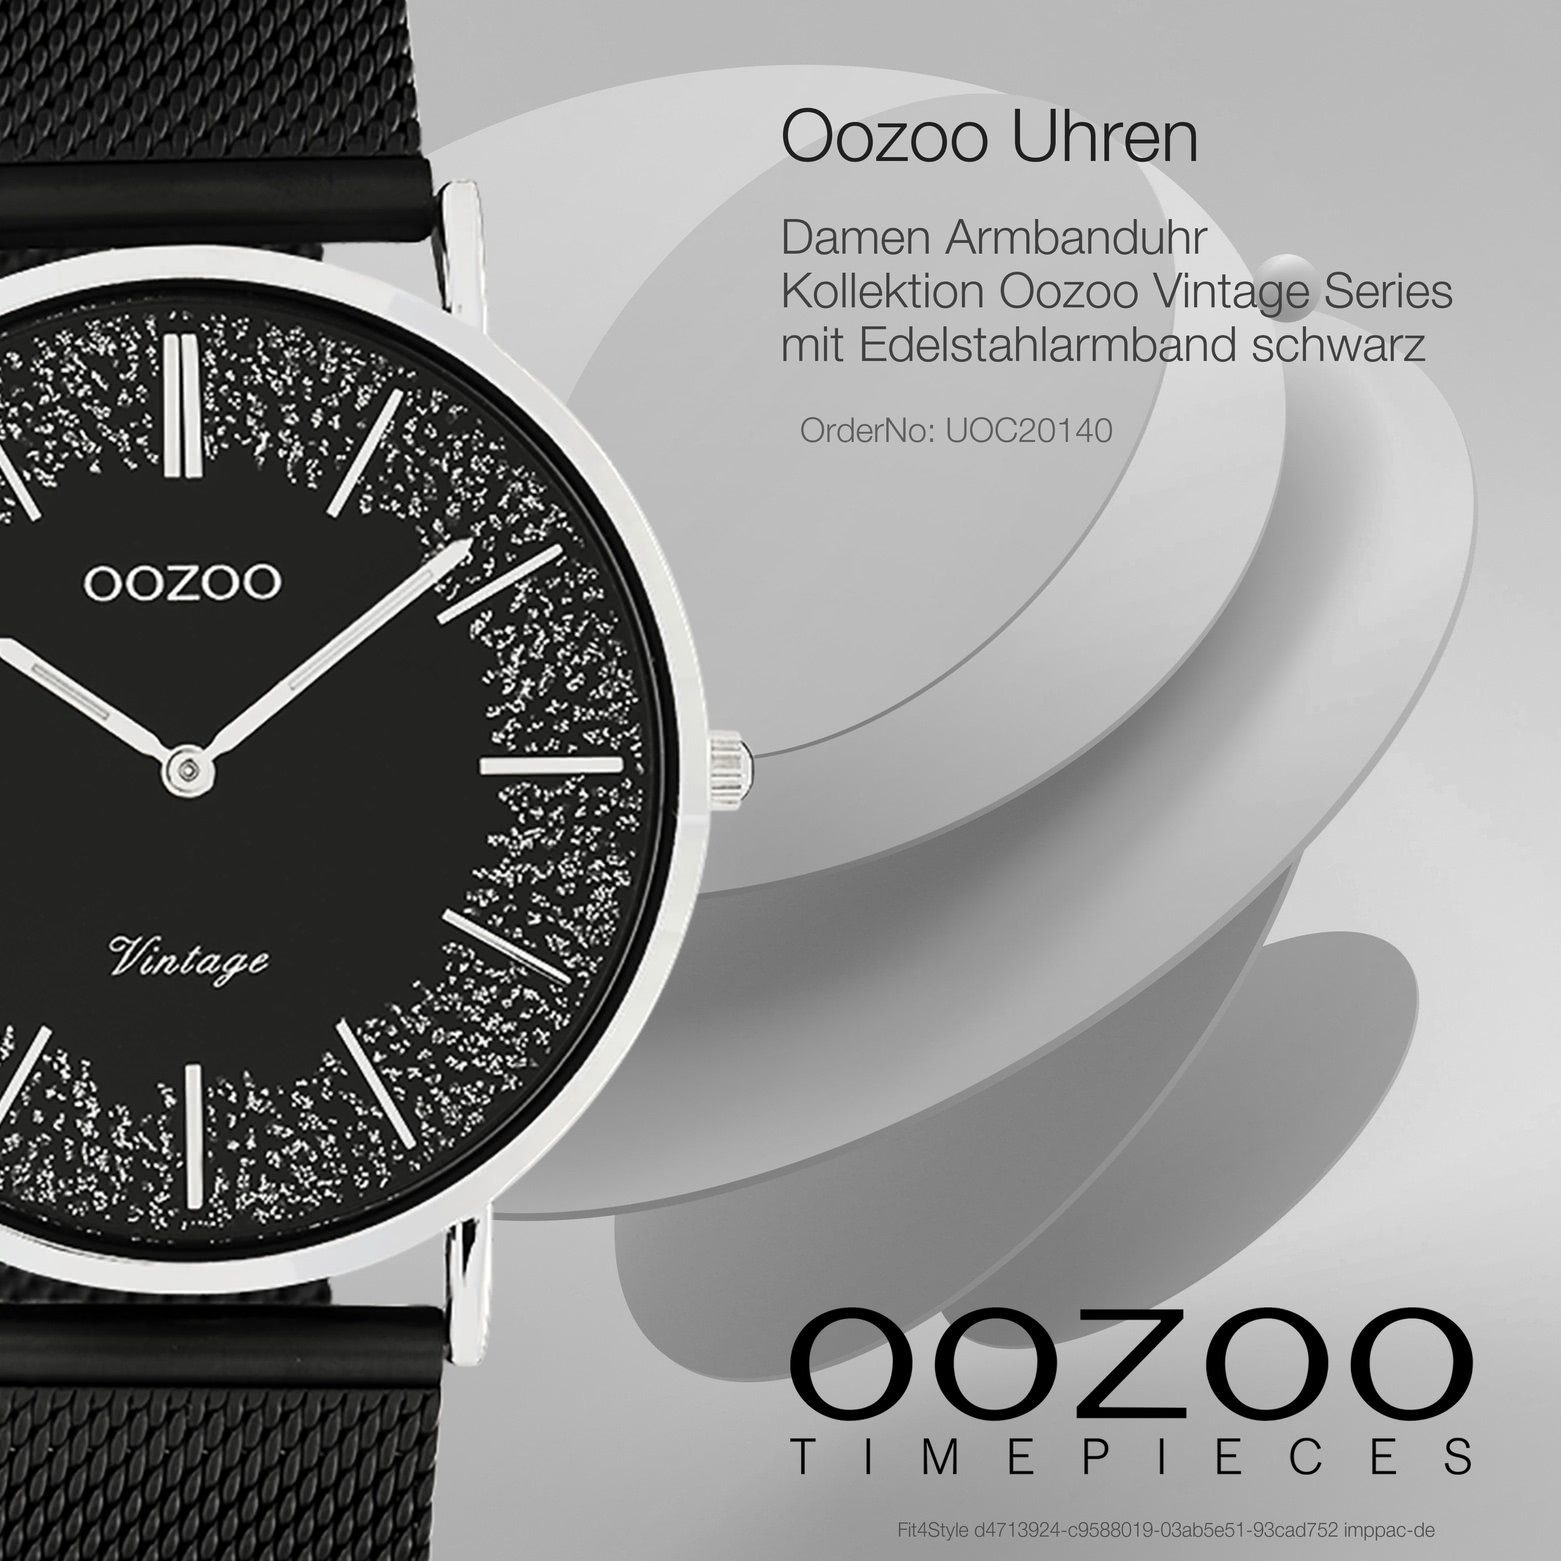 Armbanduhr Damenuhr Damen Analog, Quarzuhr groß Oozoo schwarz Casual-Style (ca. OOZOO 40mm) Edelstahlarmband, rund,